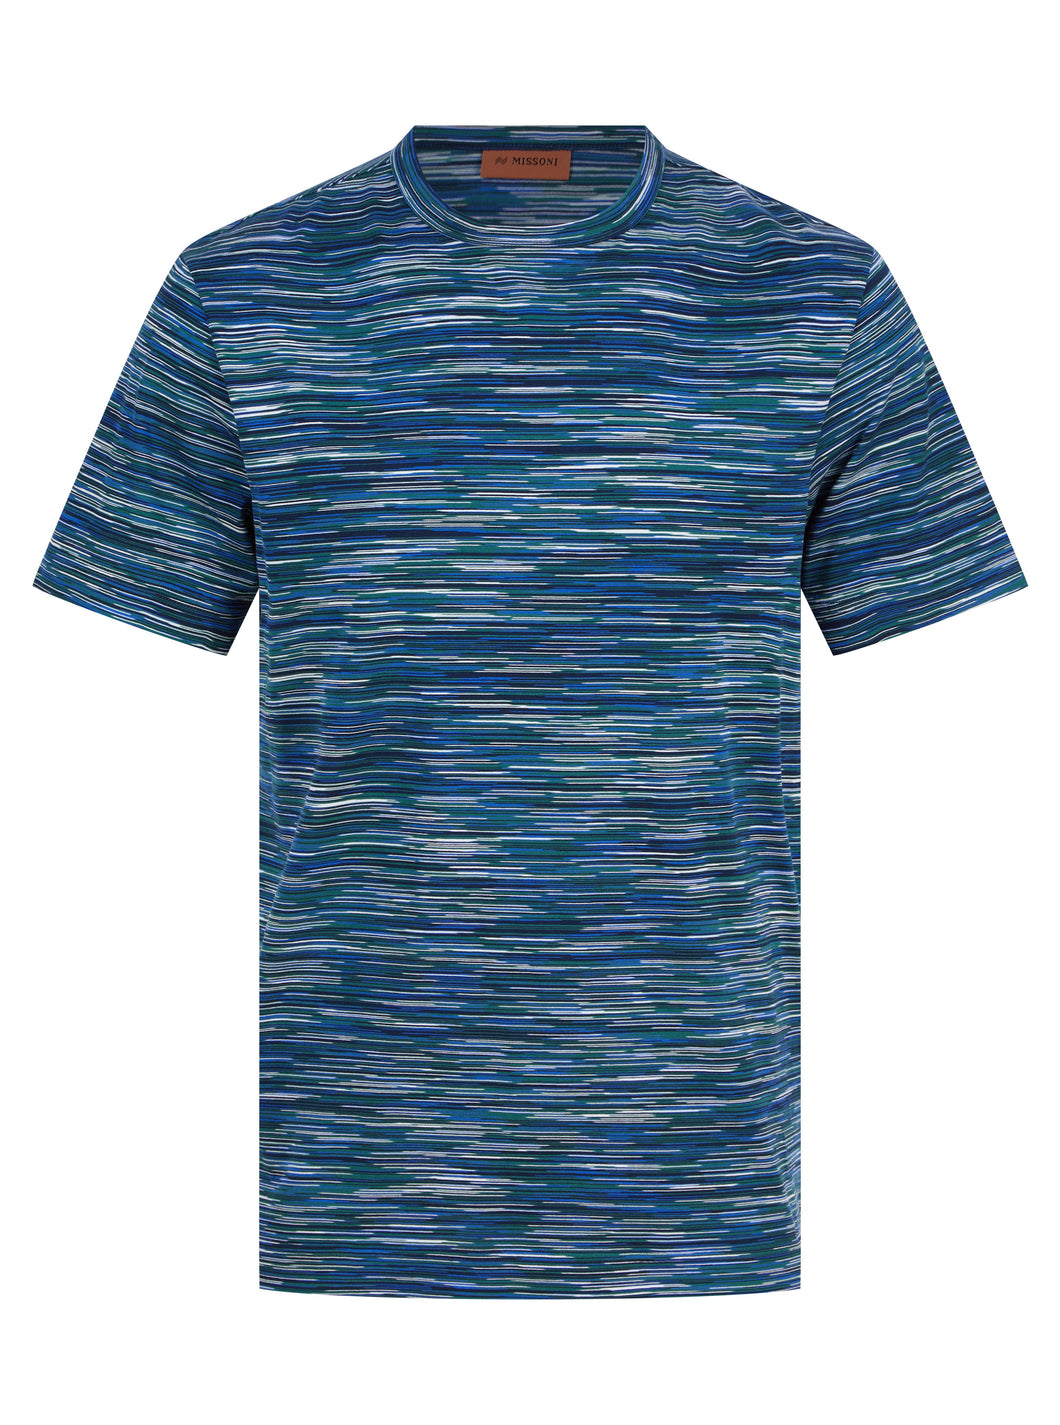 Missoni Stripe T Shirt Blue